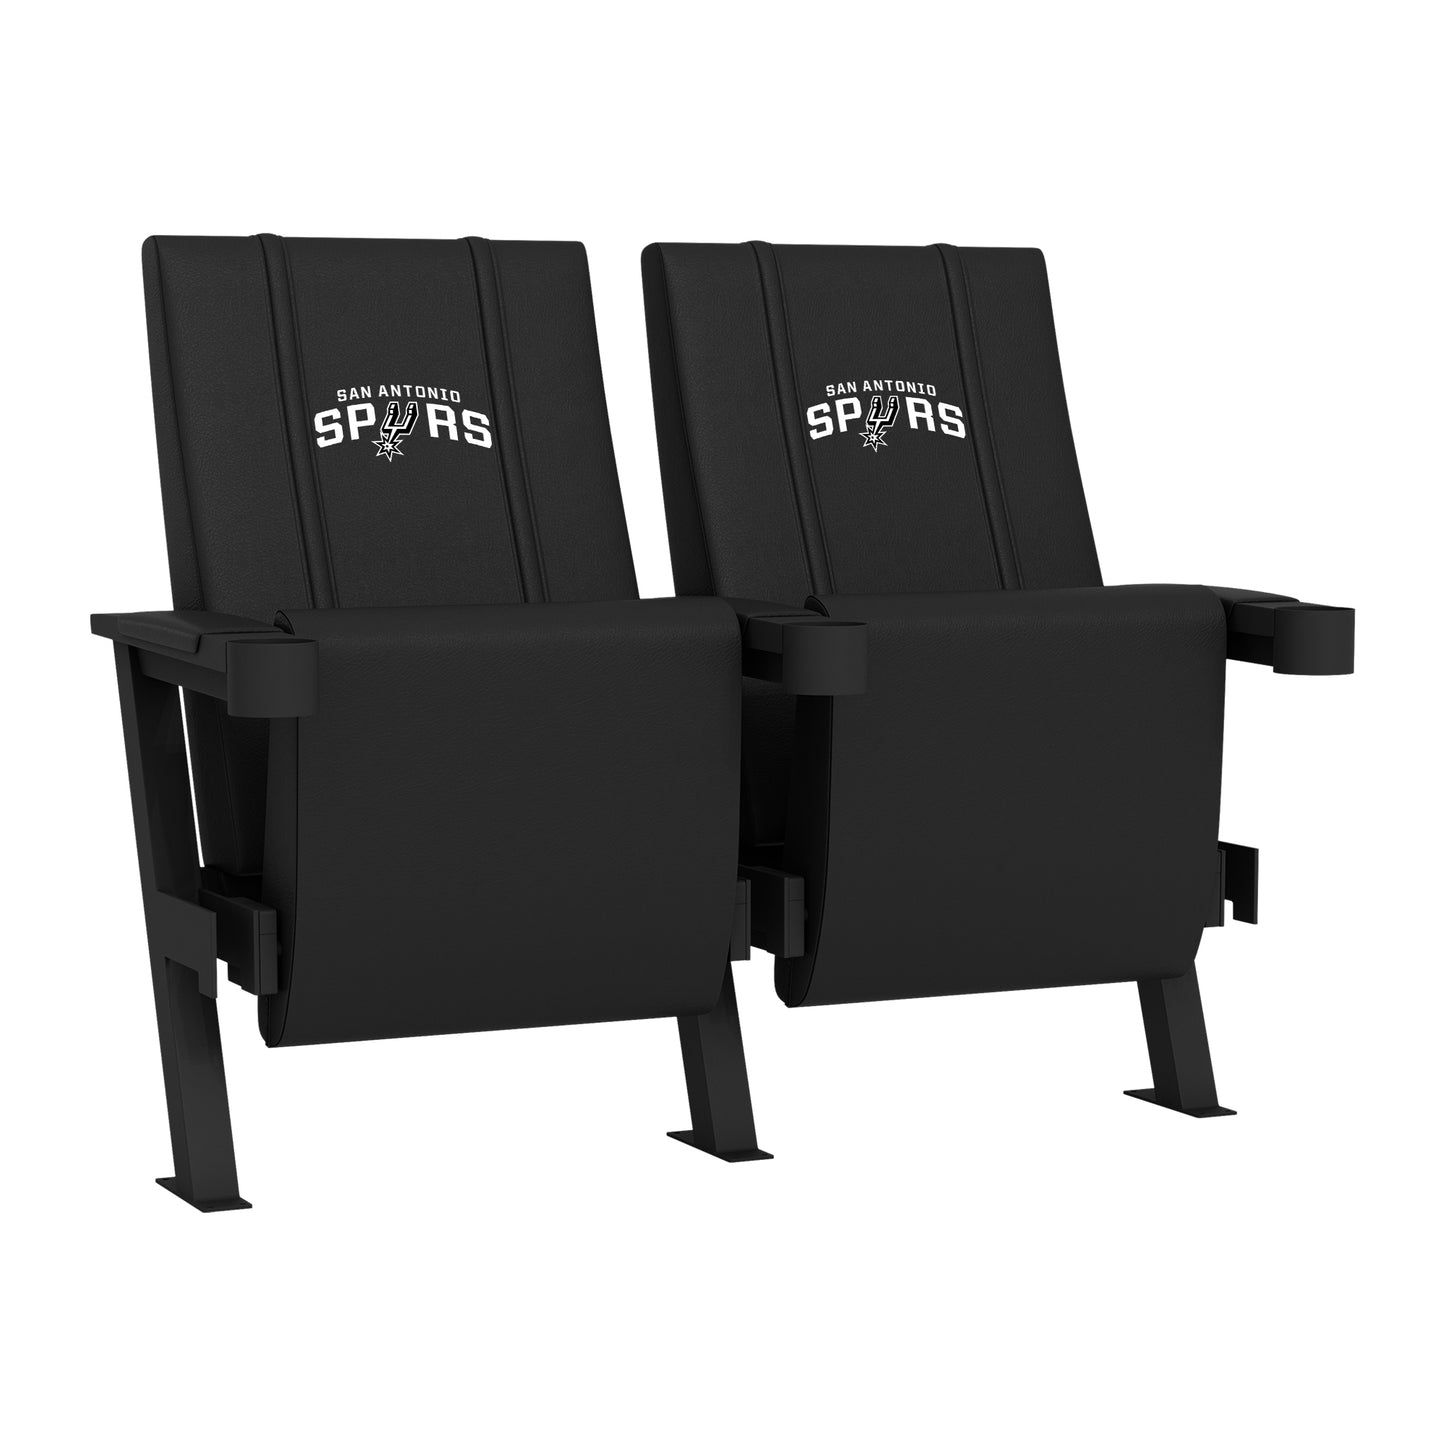 SuiteMax 3.5 VIP Seats with San Antonio Spurs Logo